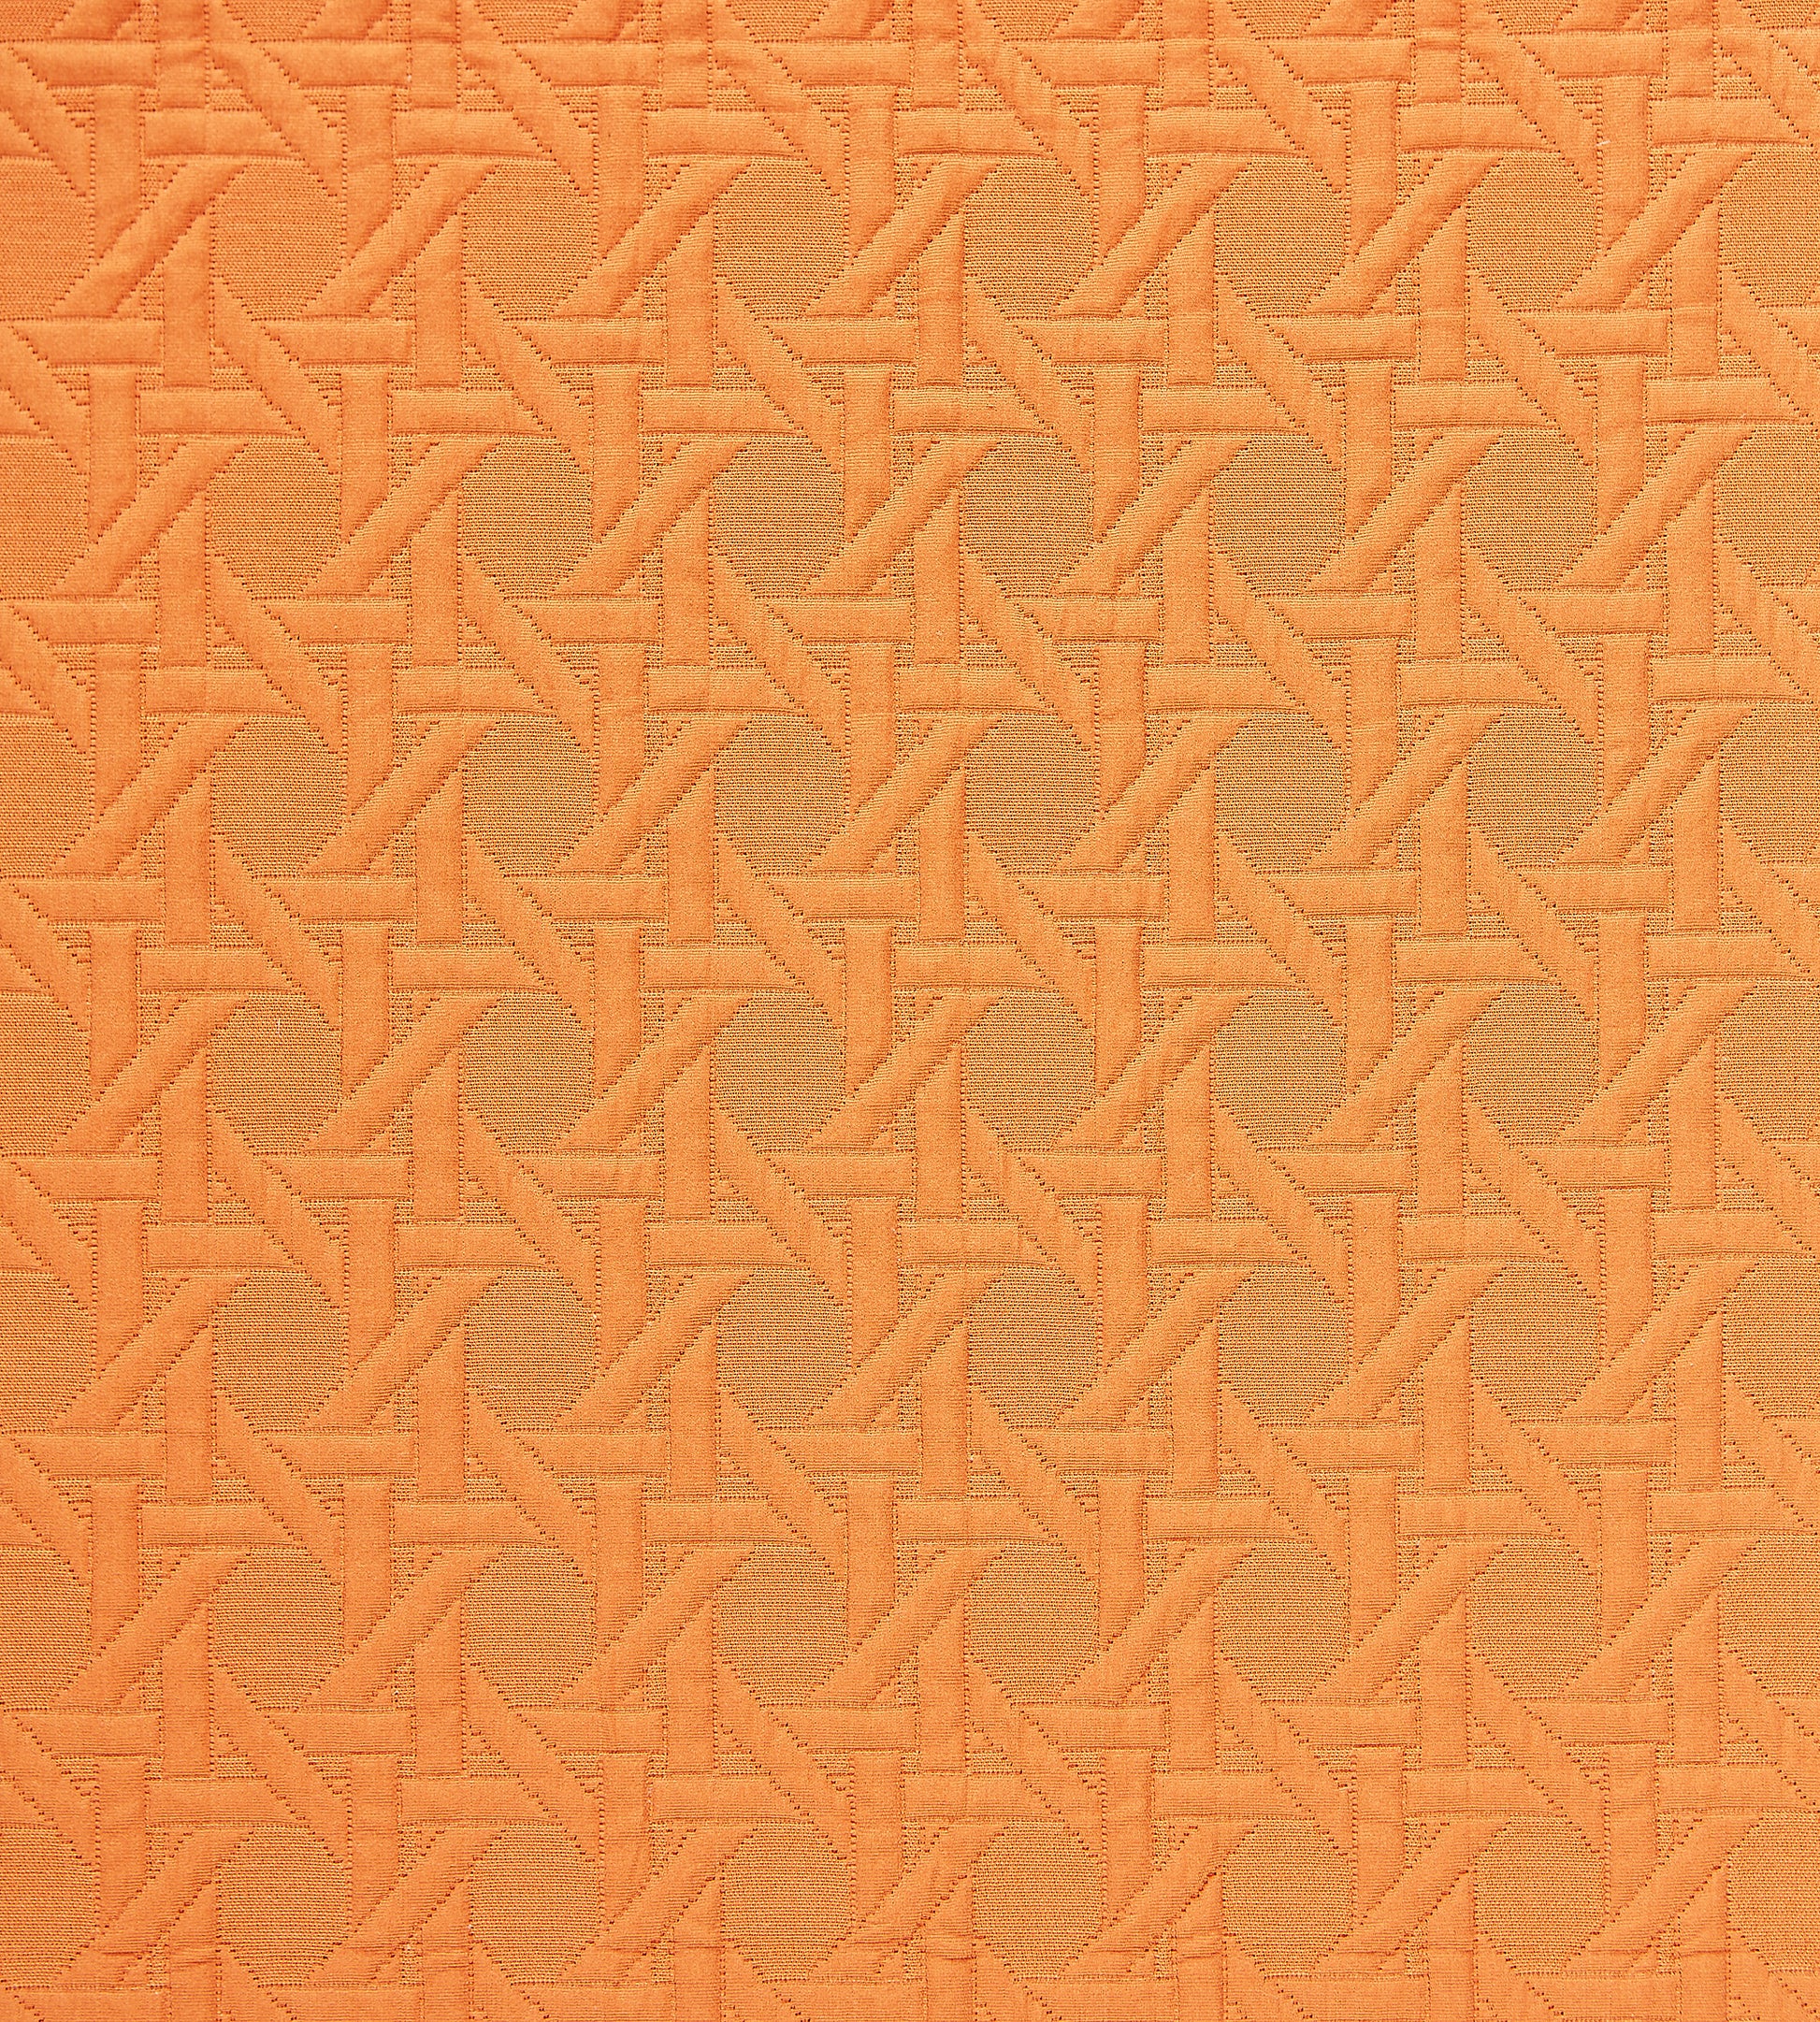 Purchase Scalamandre Fabric Pattern number SC 000427008, Canestro Matelasse Mandarin 1